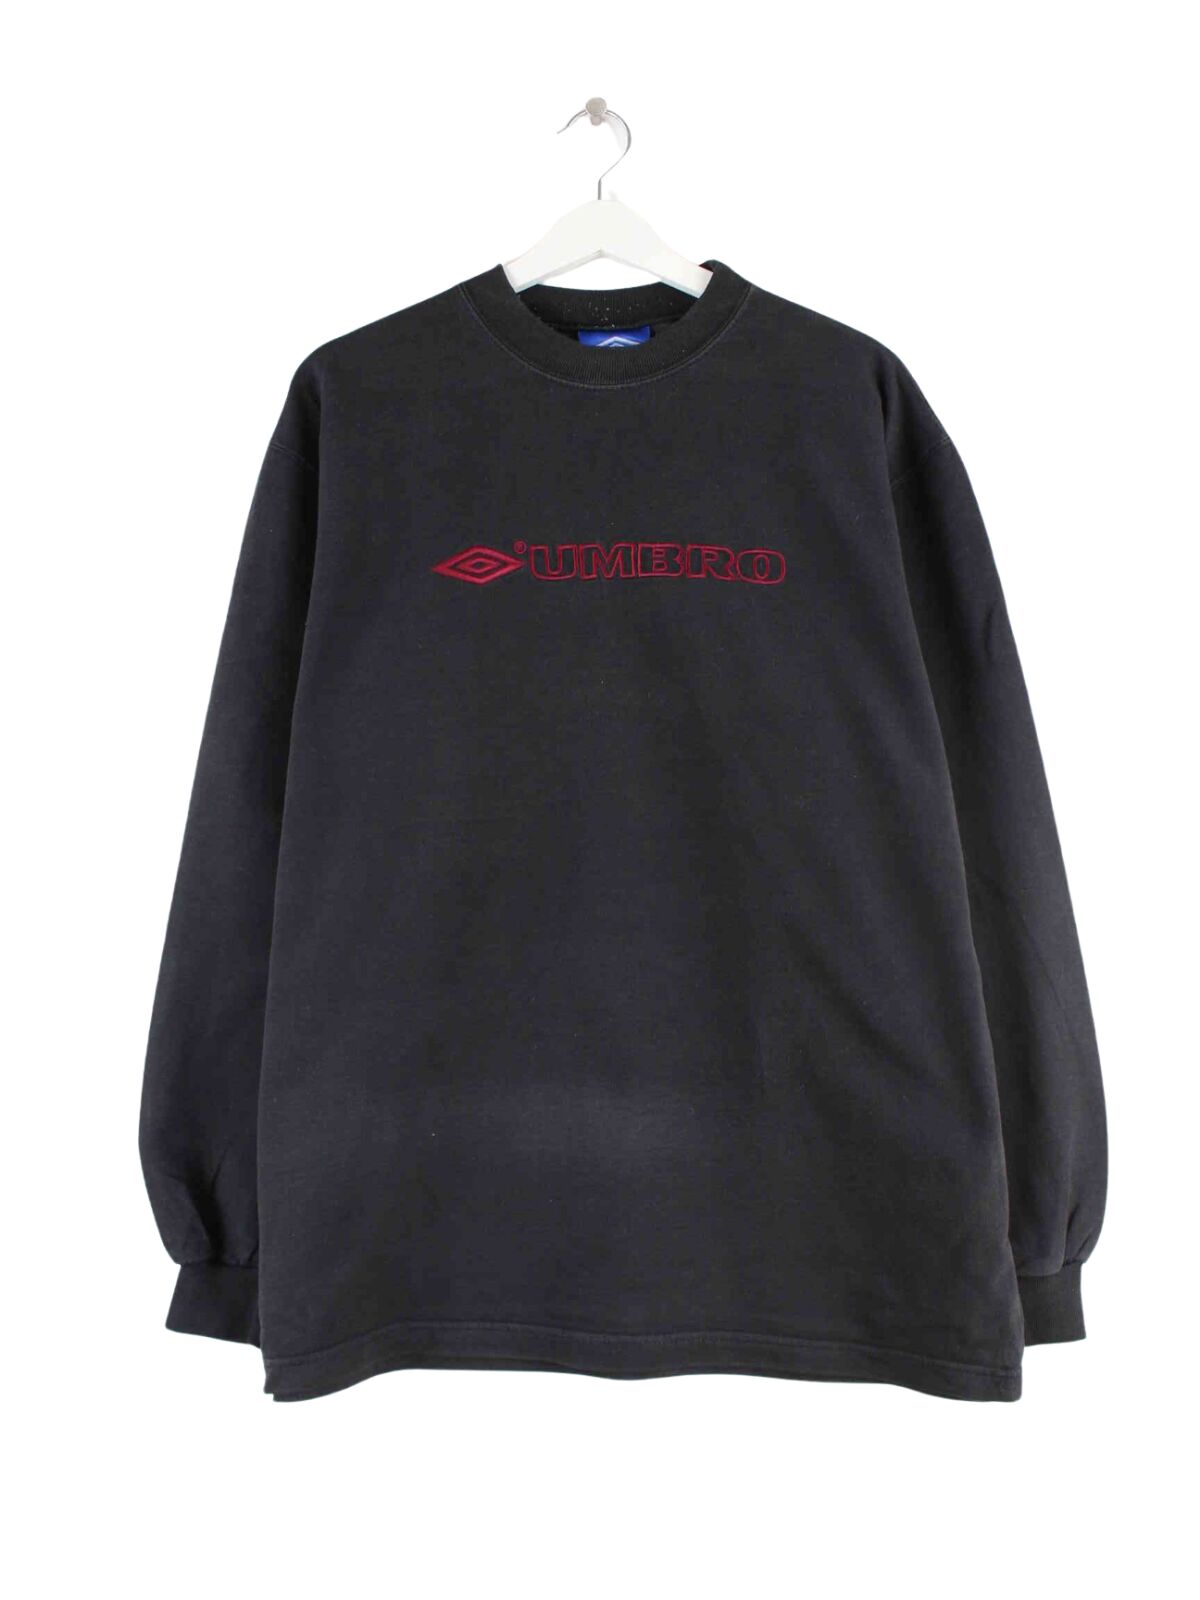 Umbro 90s Vintage Embroidered Sweater Schwarz M (front image)